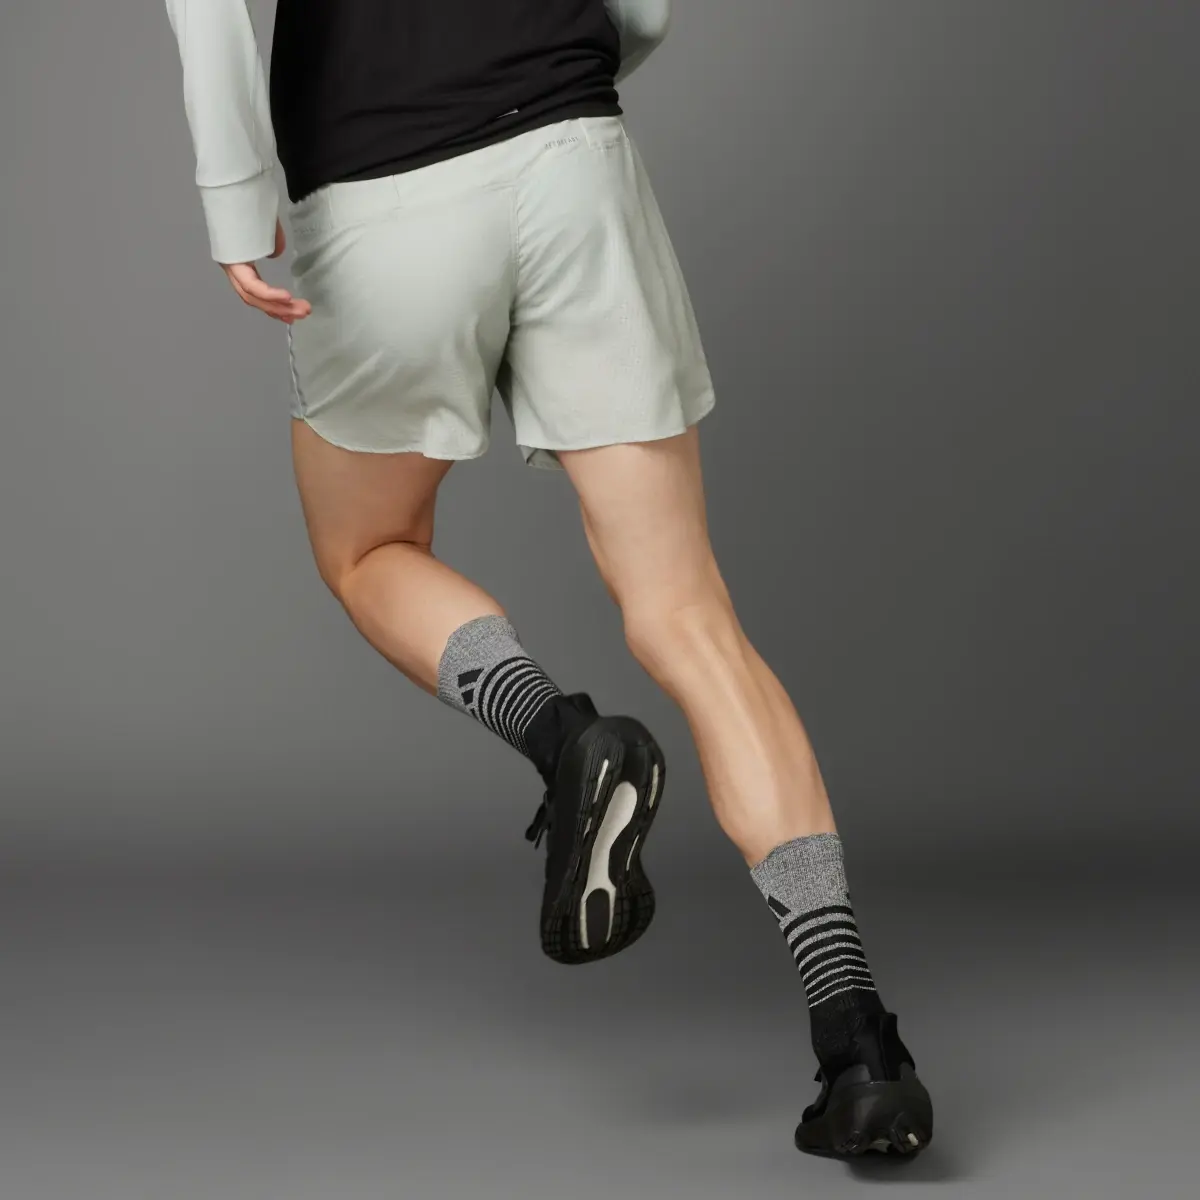 Adidas Designed 4 Running Shorts. 2